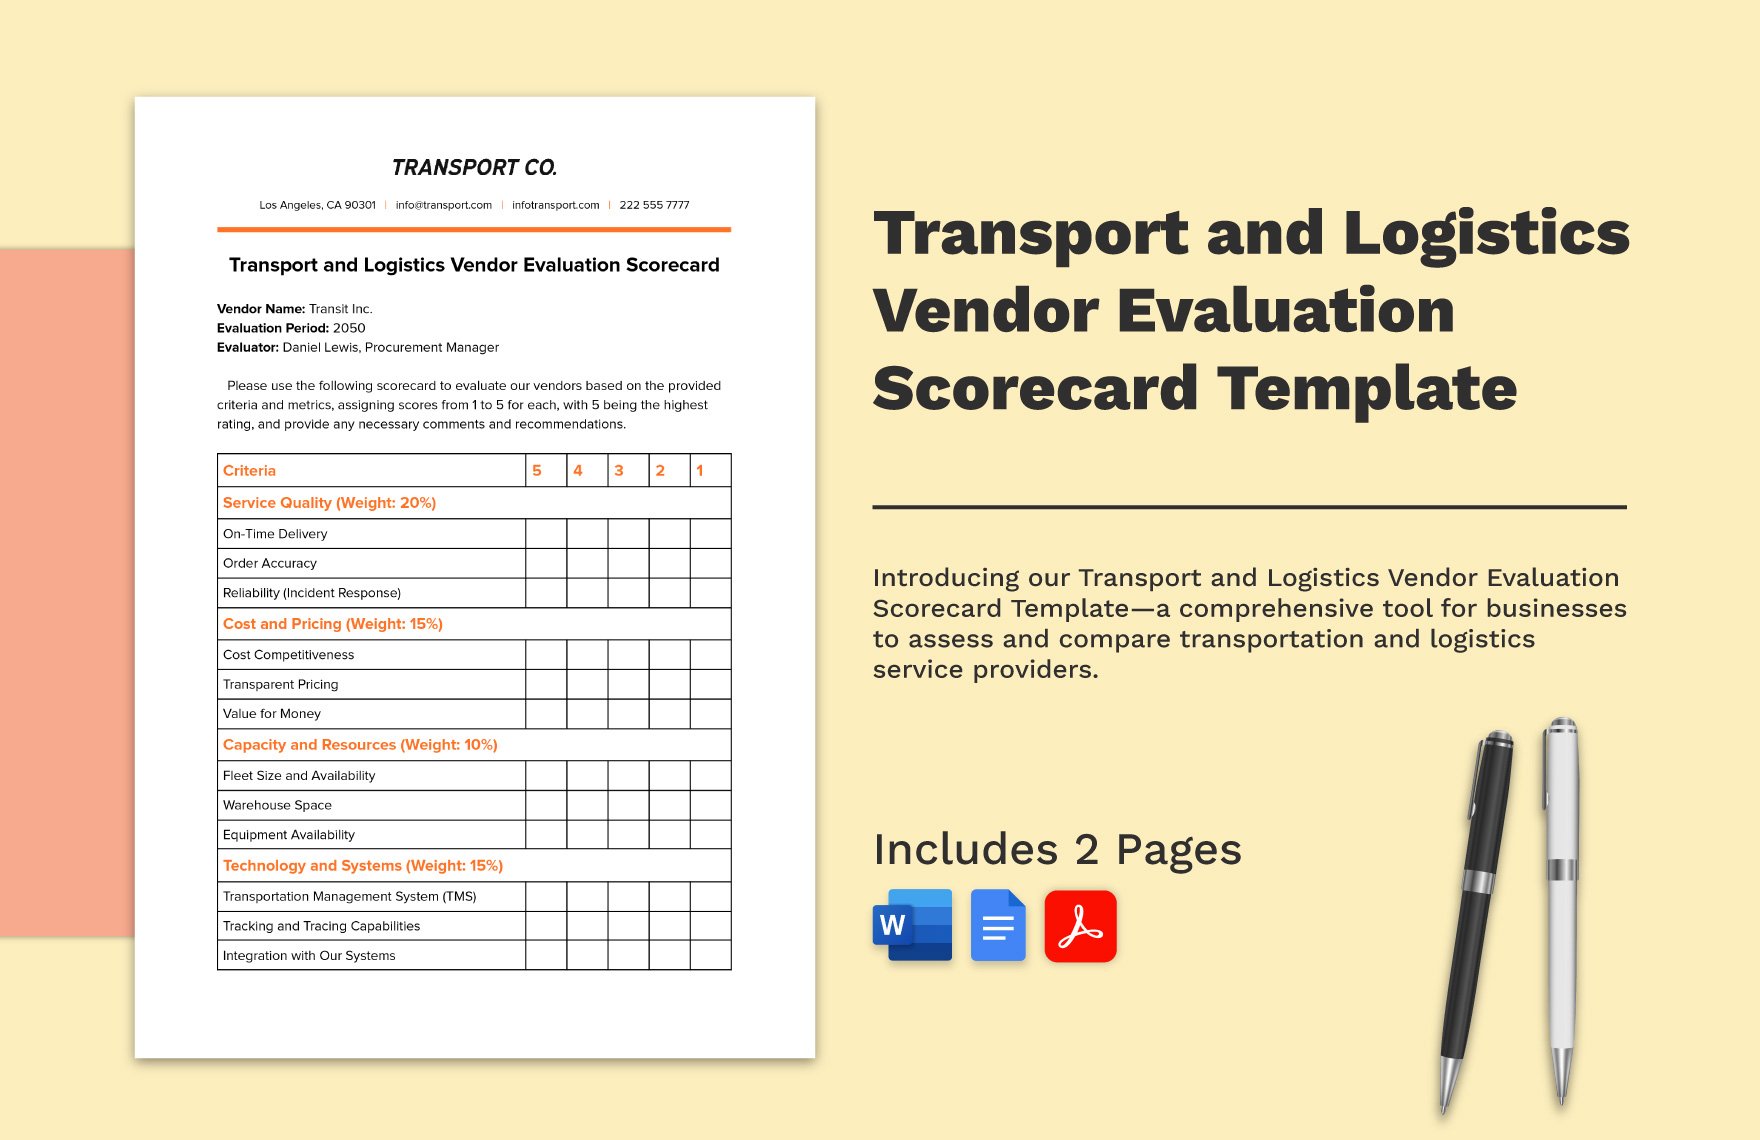 Transport and Logistics Vendor Evaluation Scorecard Template